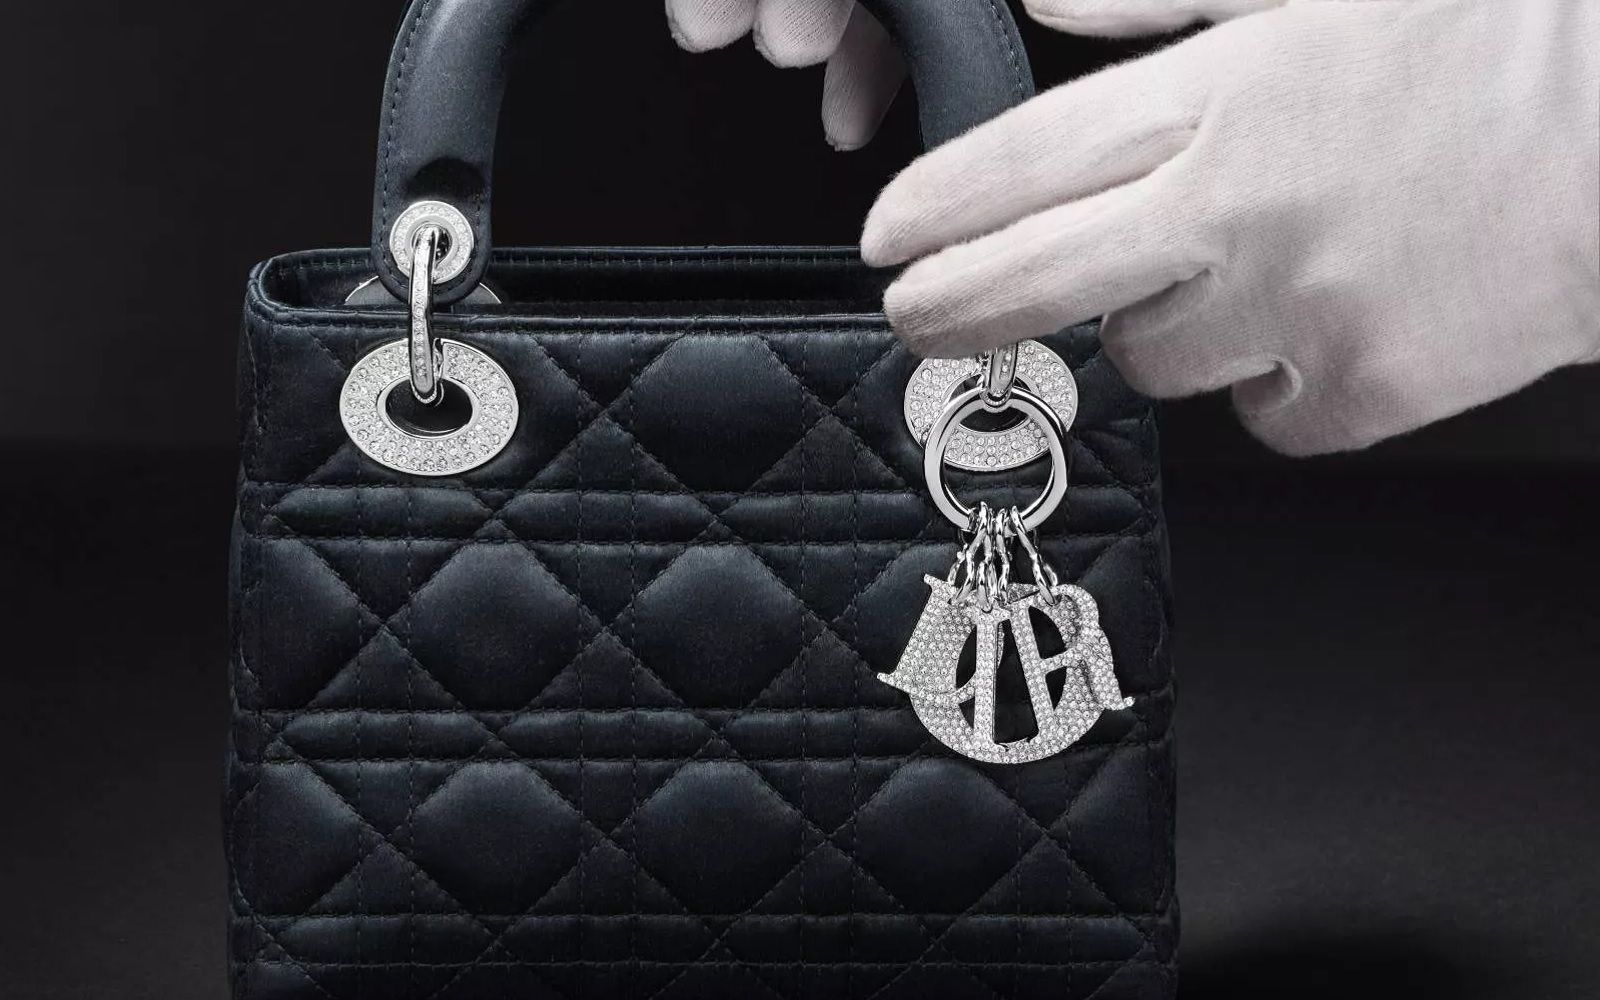 History of the Lady Dior, Princess Diana's favourite bag